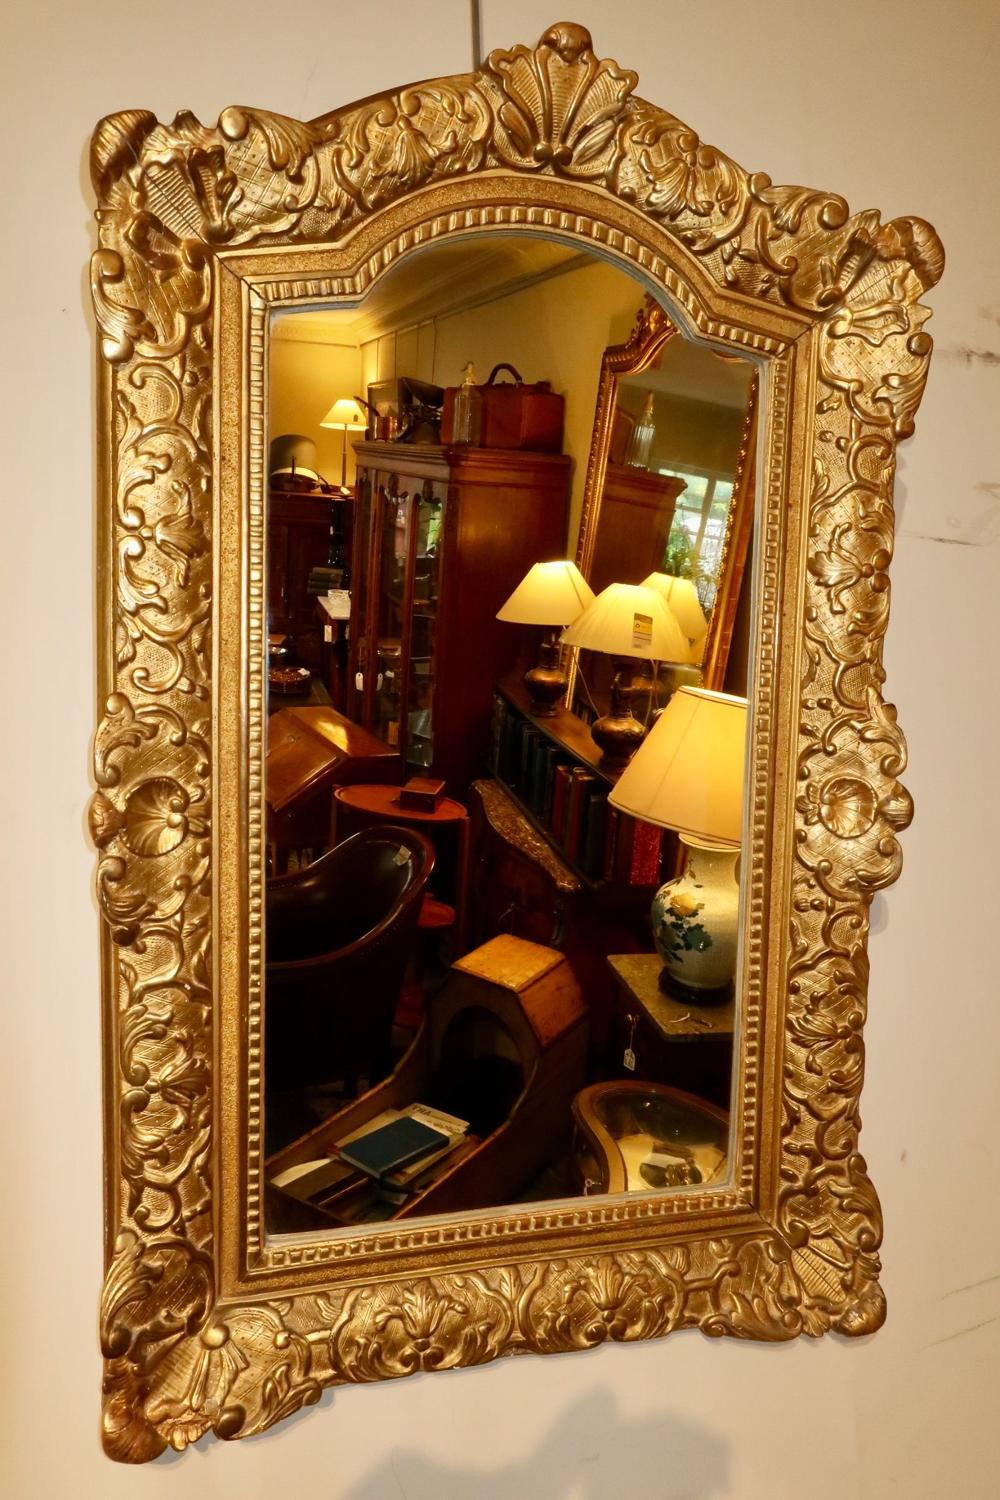 18th Century Regence Mirror